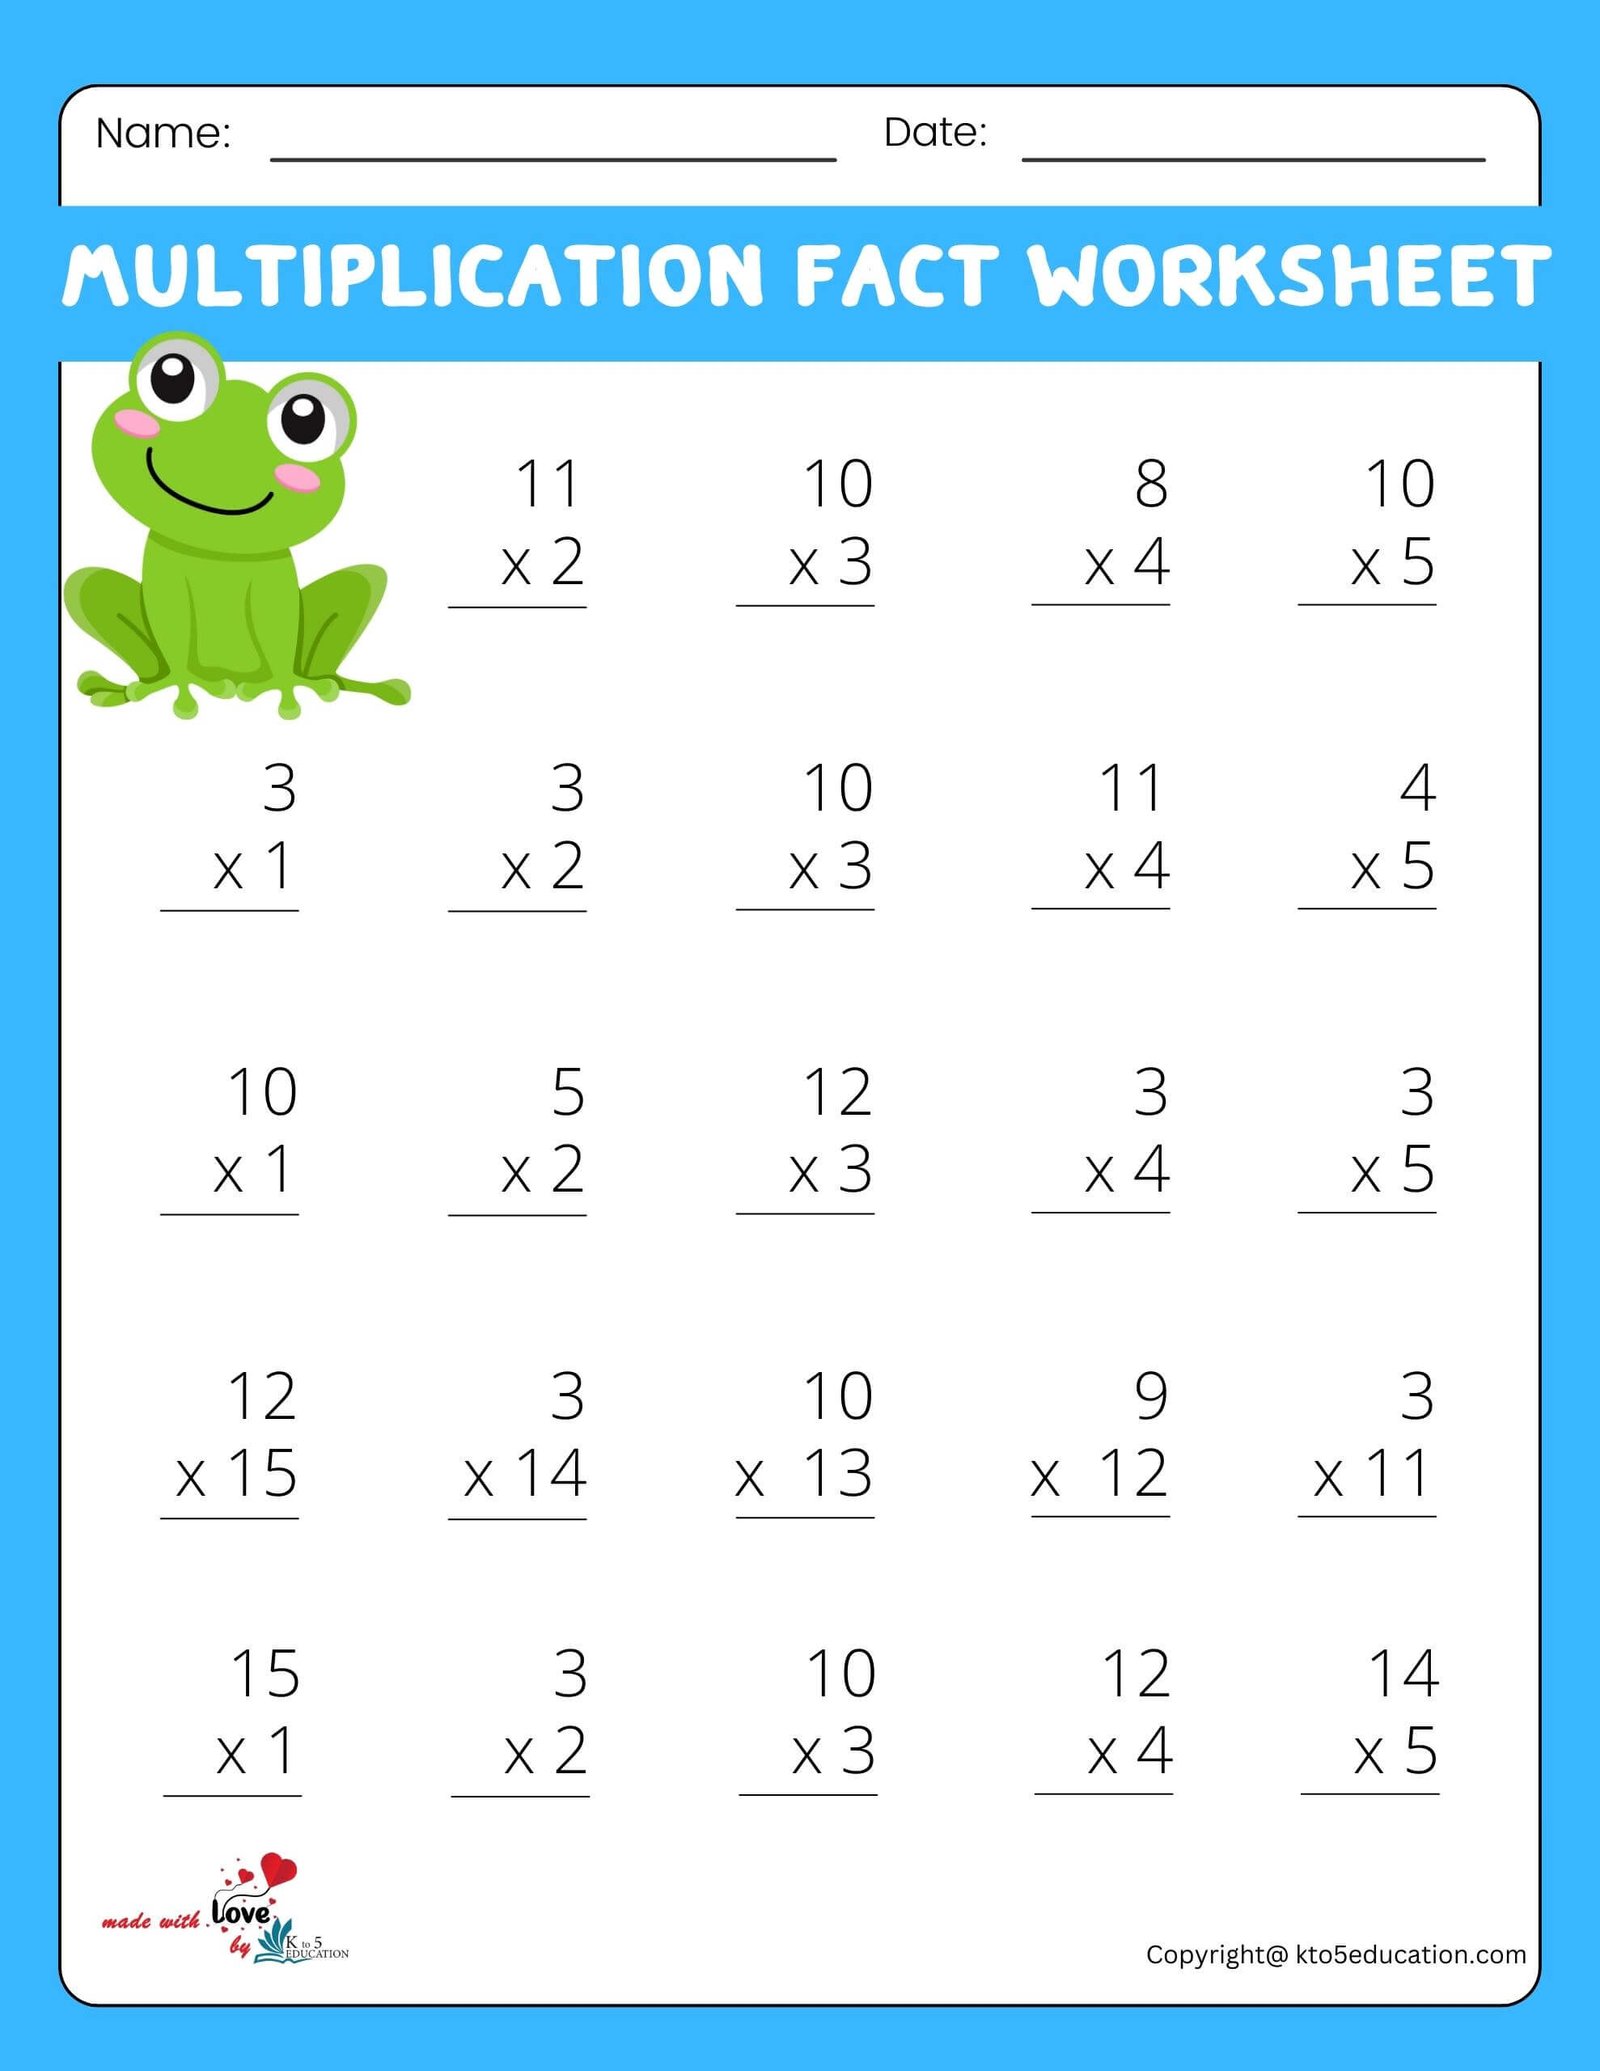 5x5 Frog Multiplication Fact Worksheet